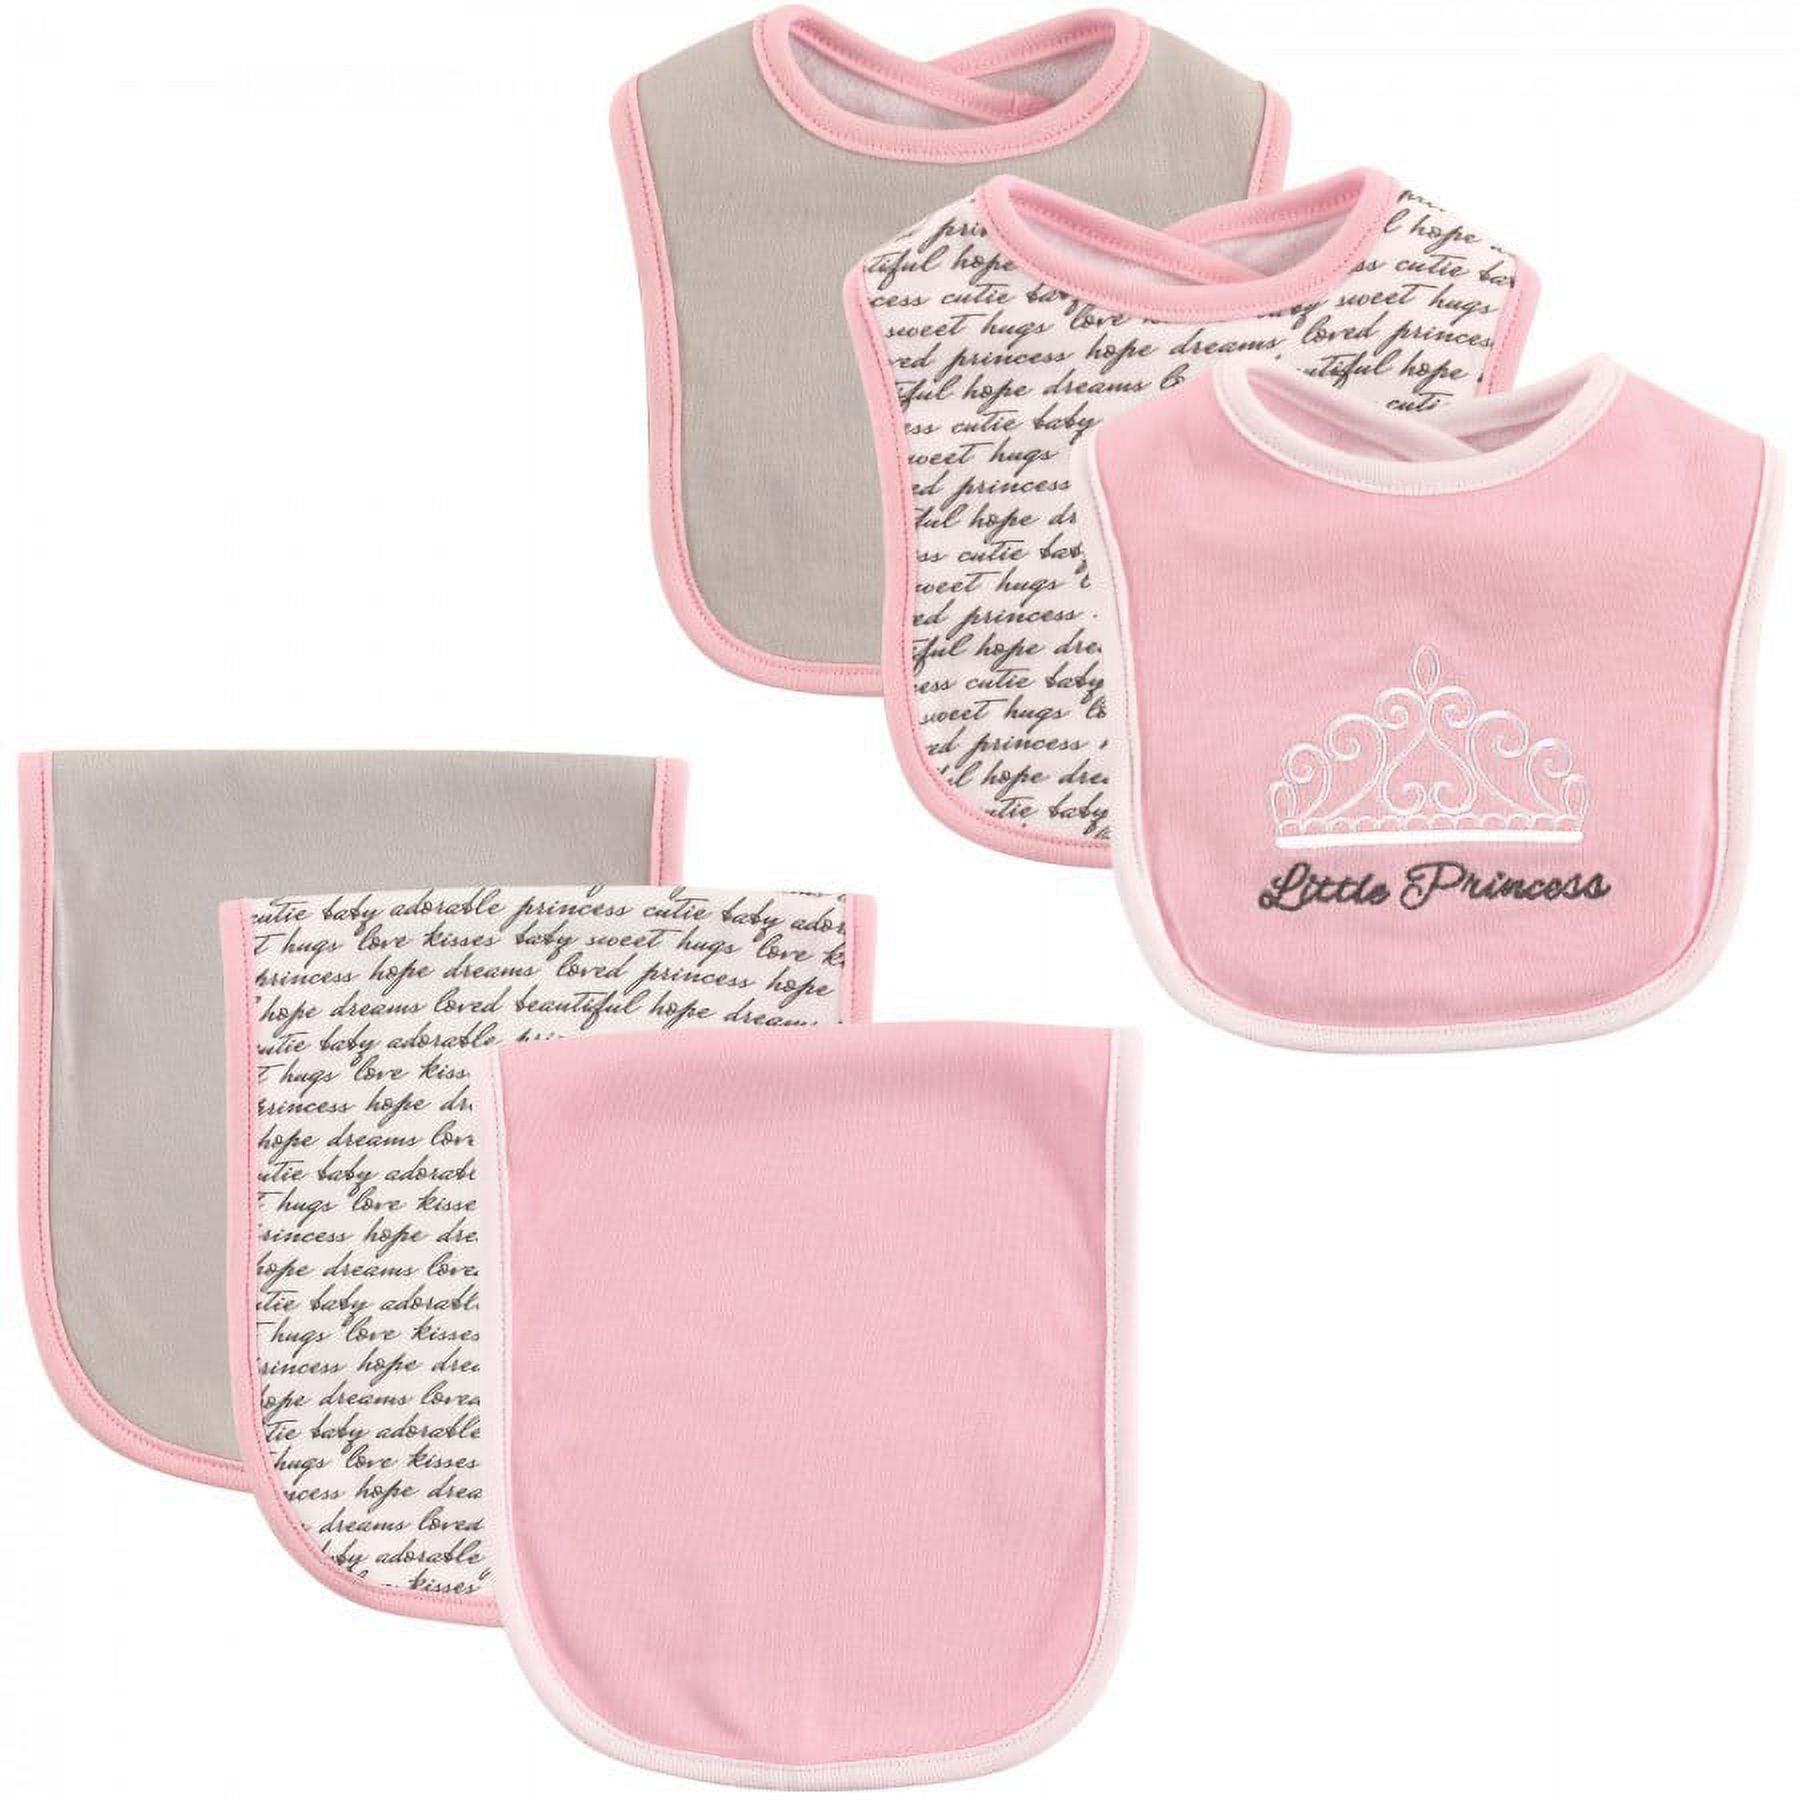 Hudson Baby Infant Girl Cotton Bib and Burp Cloth Set 6pk, Princess, One Size - image 1 of 3